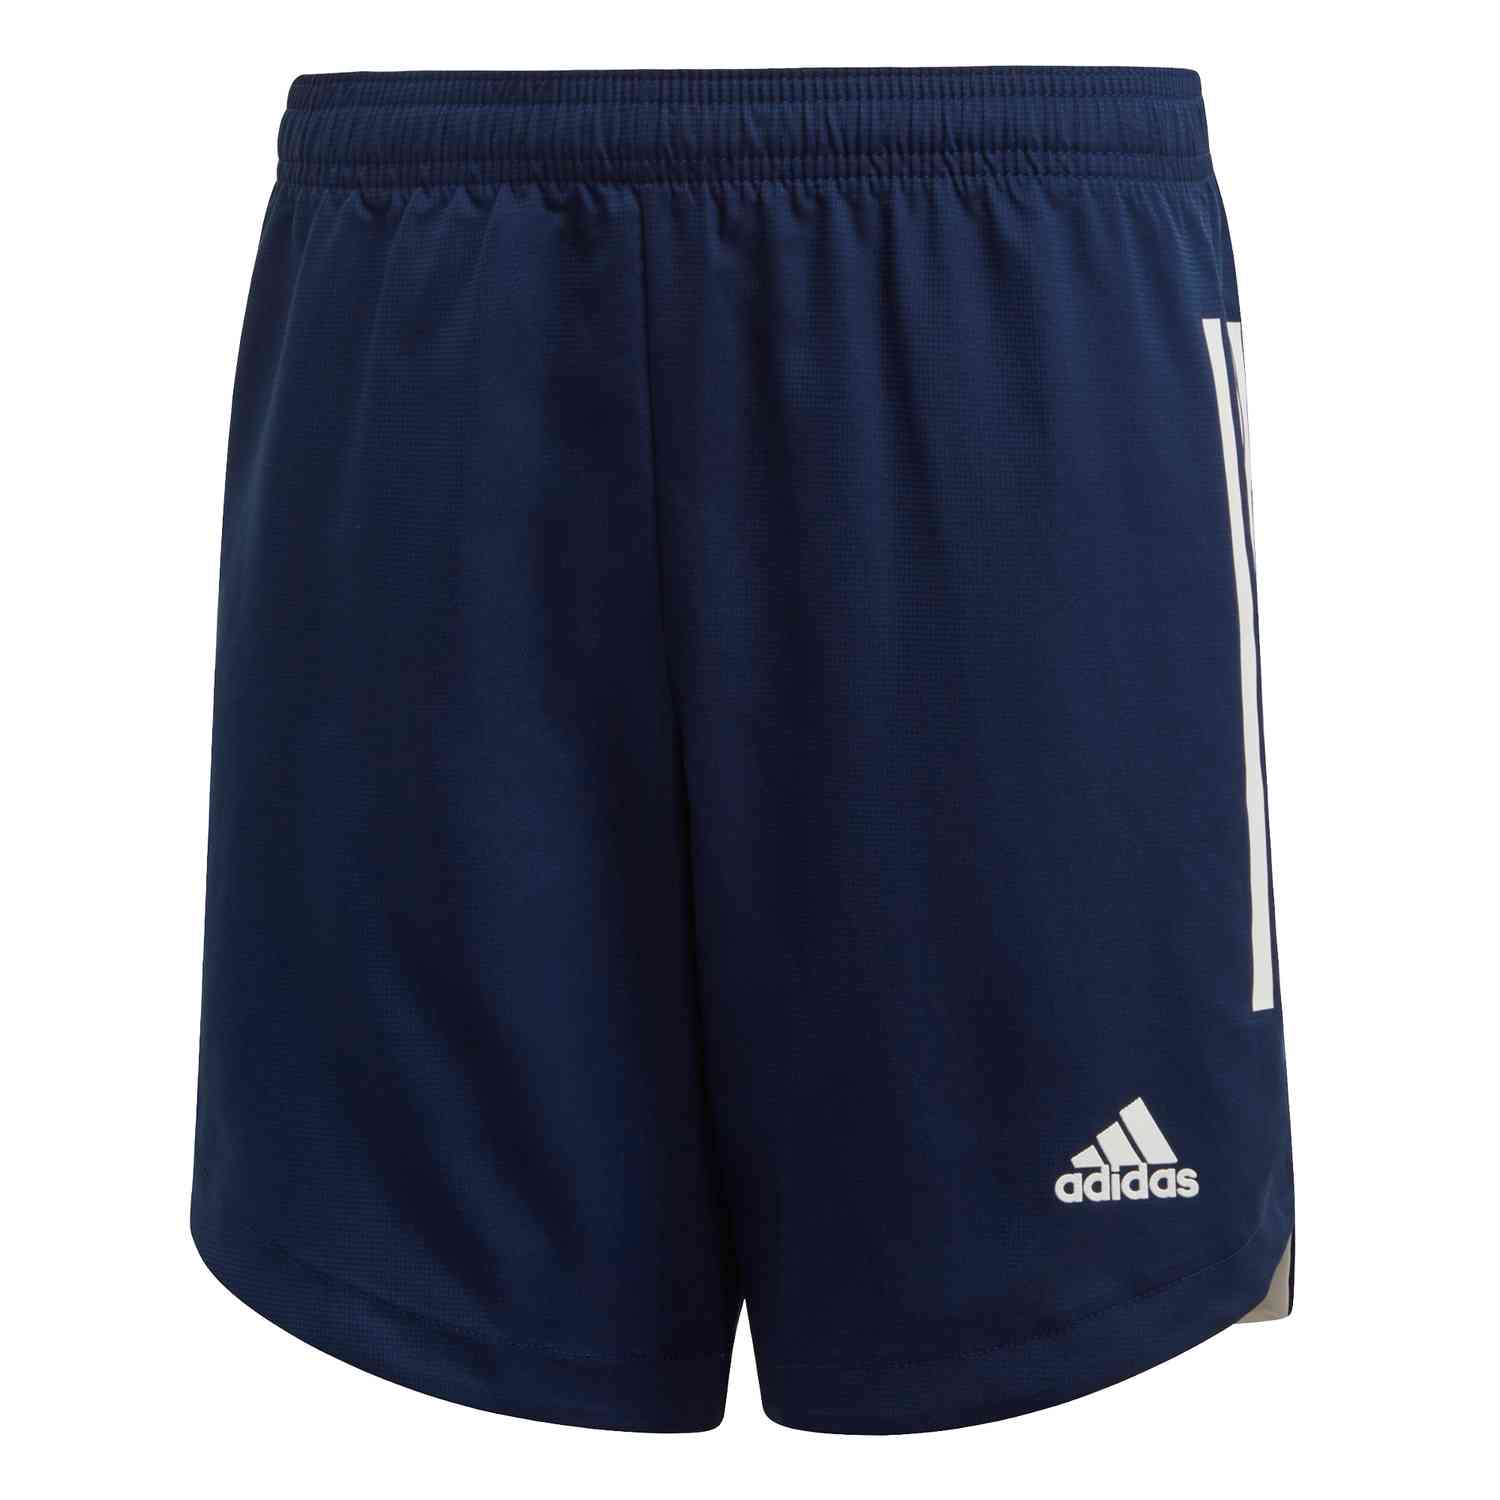 Kids adidas Condivo 20 Shorts - Team Navy Blue/White - SoccerPro